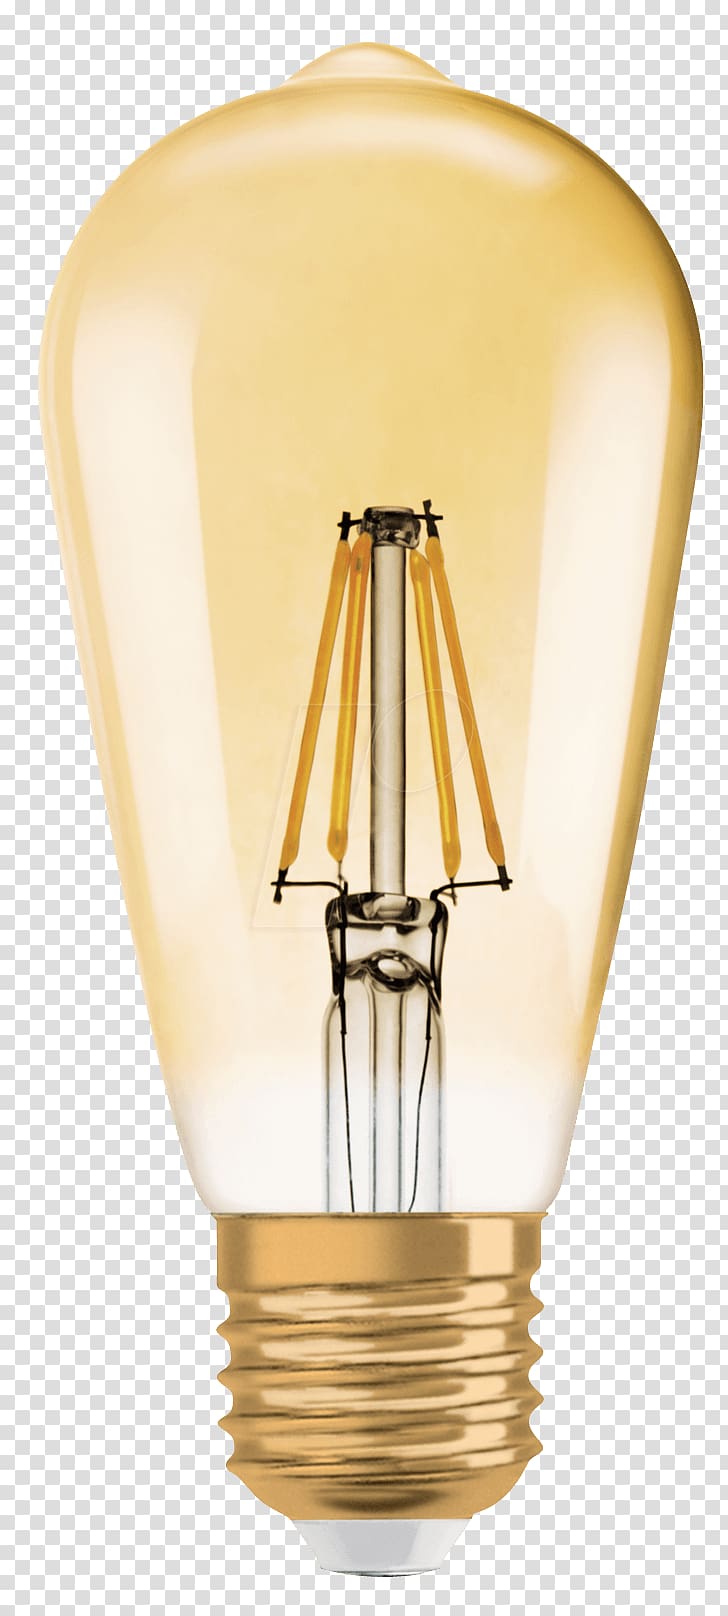 LED lamp LED filament Incandescent light bulb Light fixture Lighting, Light bulb transparent background PNG clipart